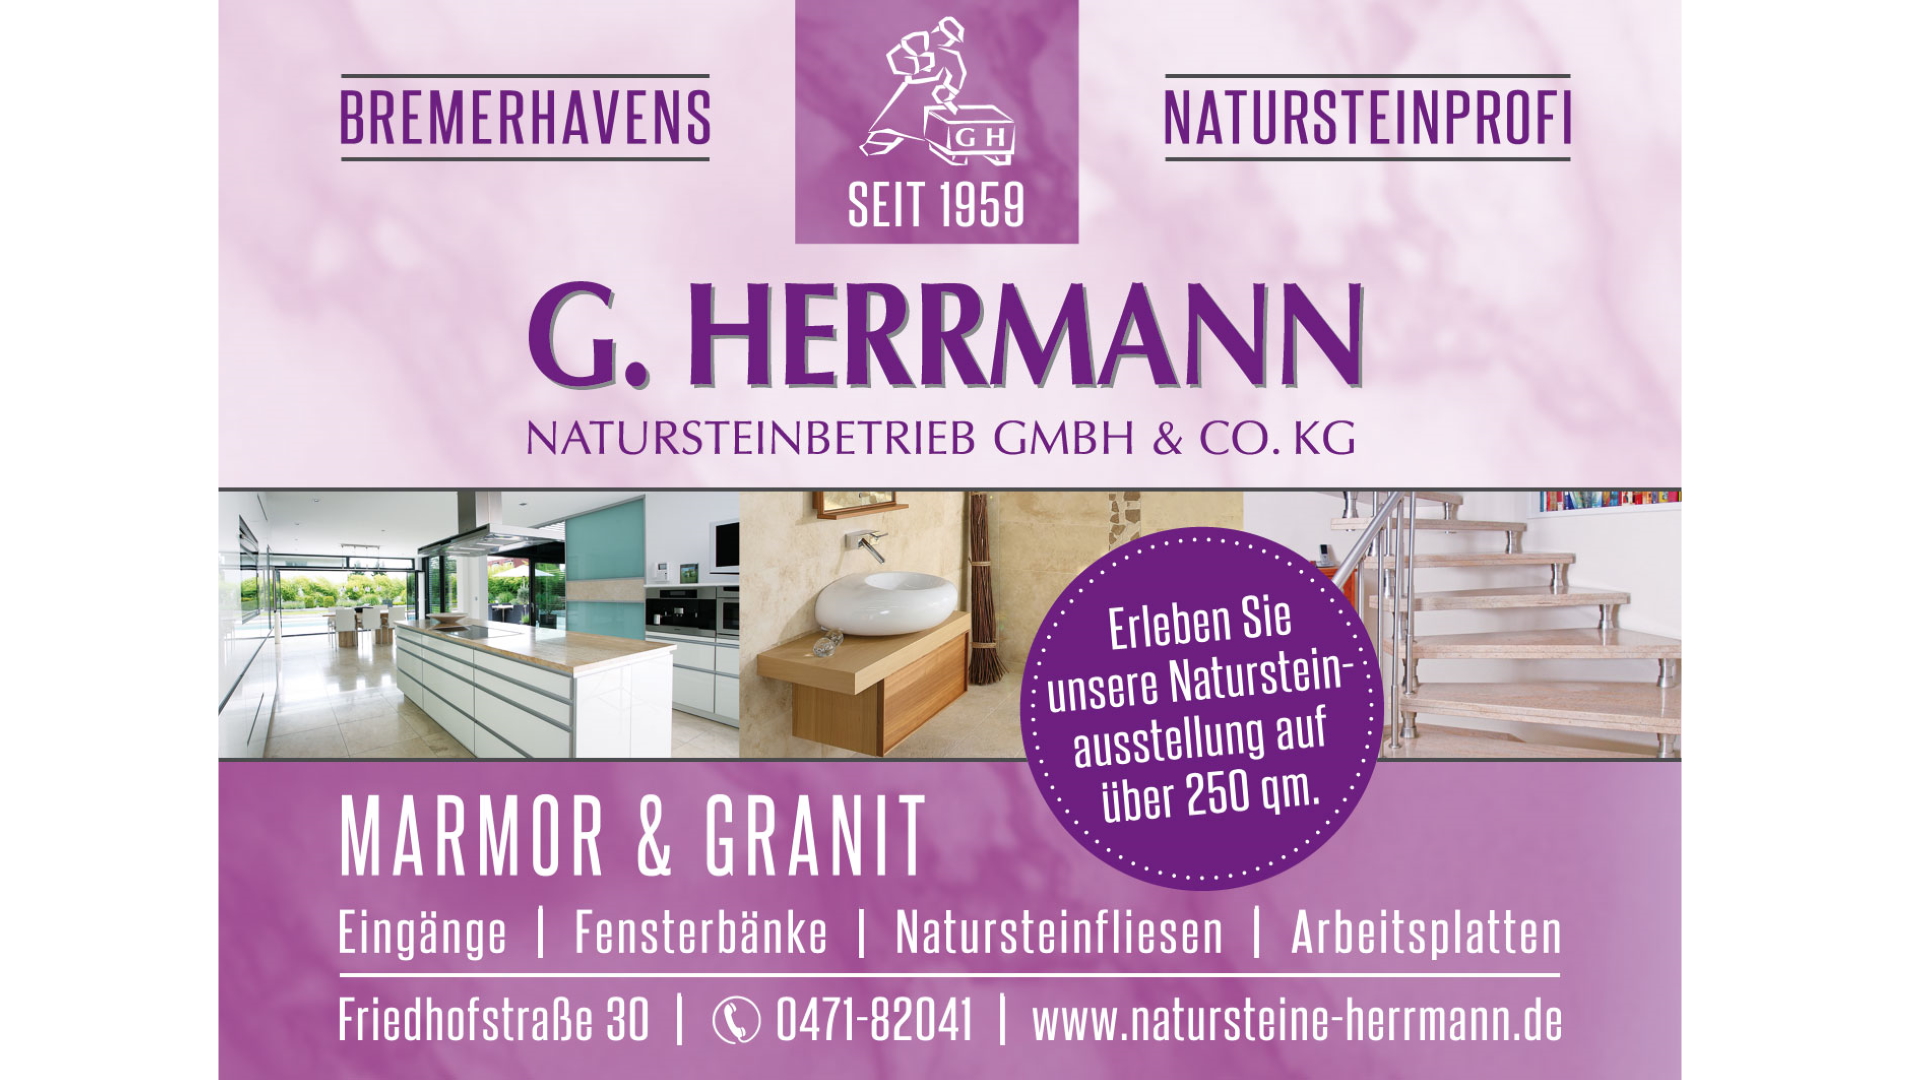 G.HERRMANN NATURSTEINBETRIEB GMBH & CO.KG